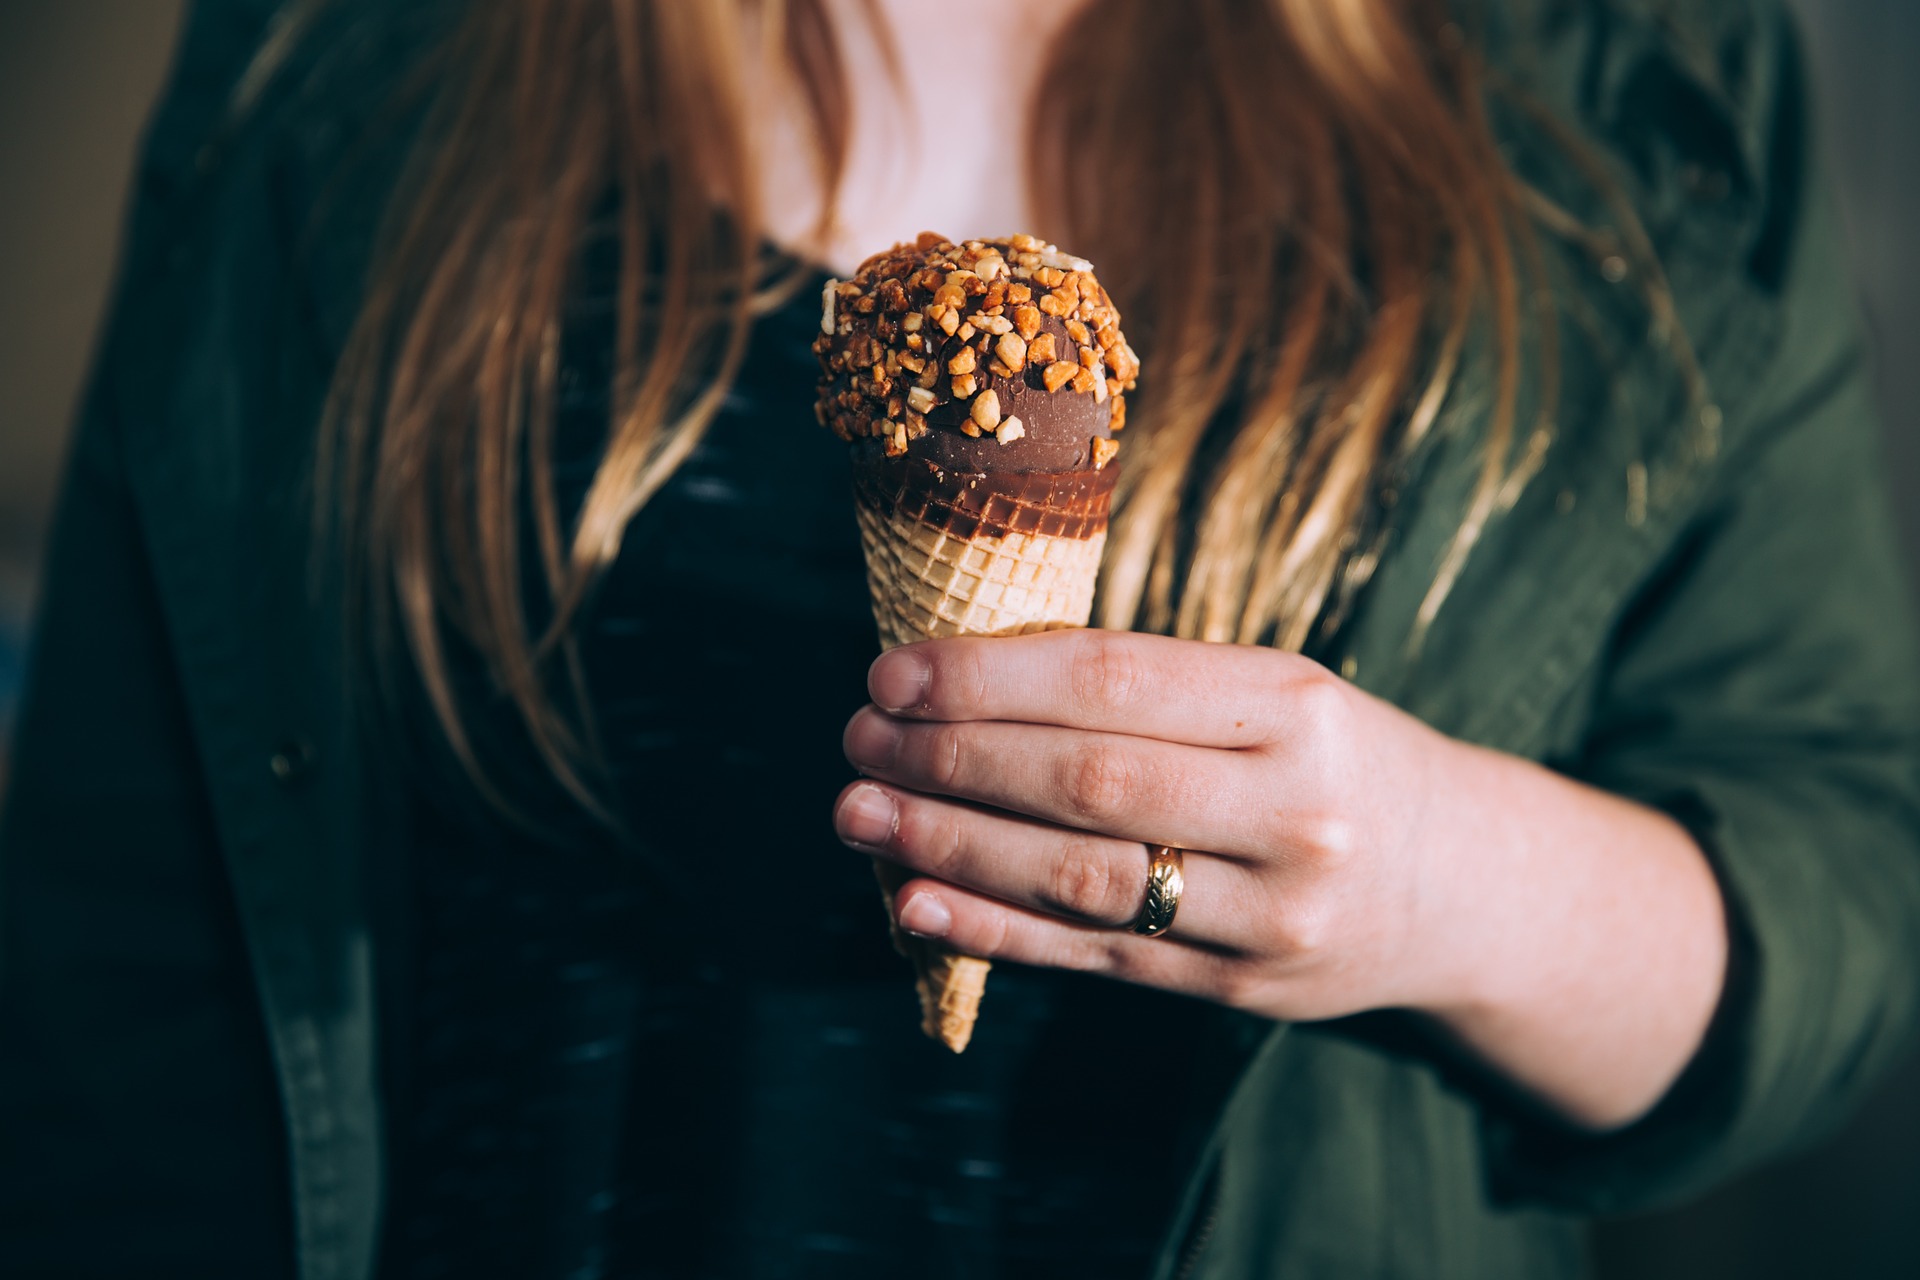 Woman Holding Cone of Ice Cream